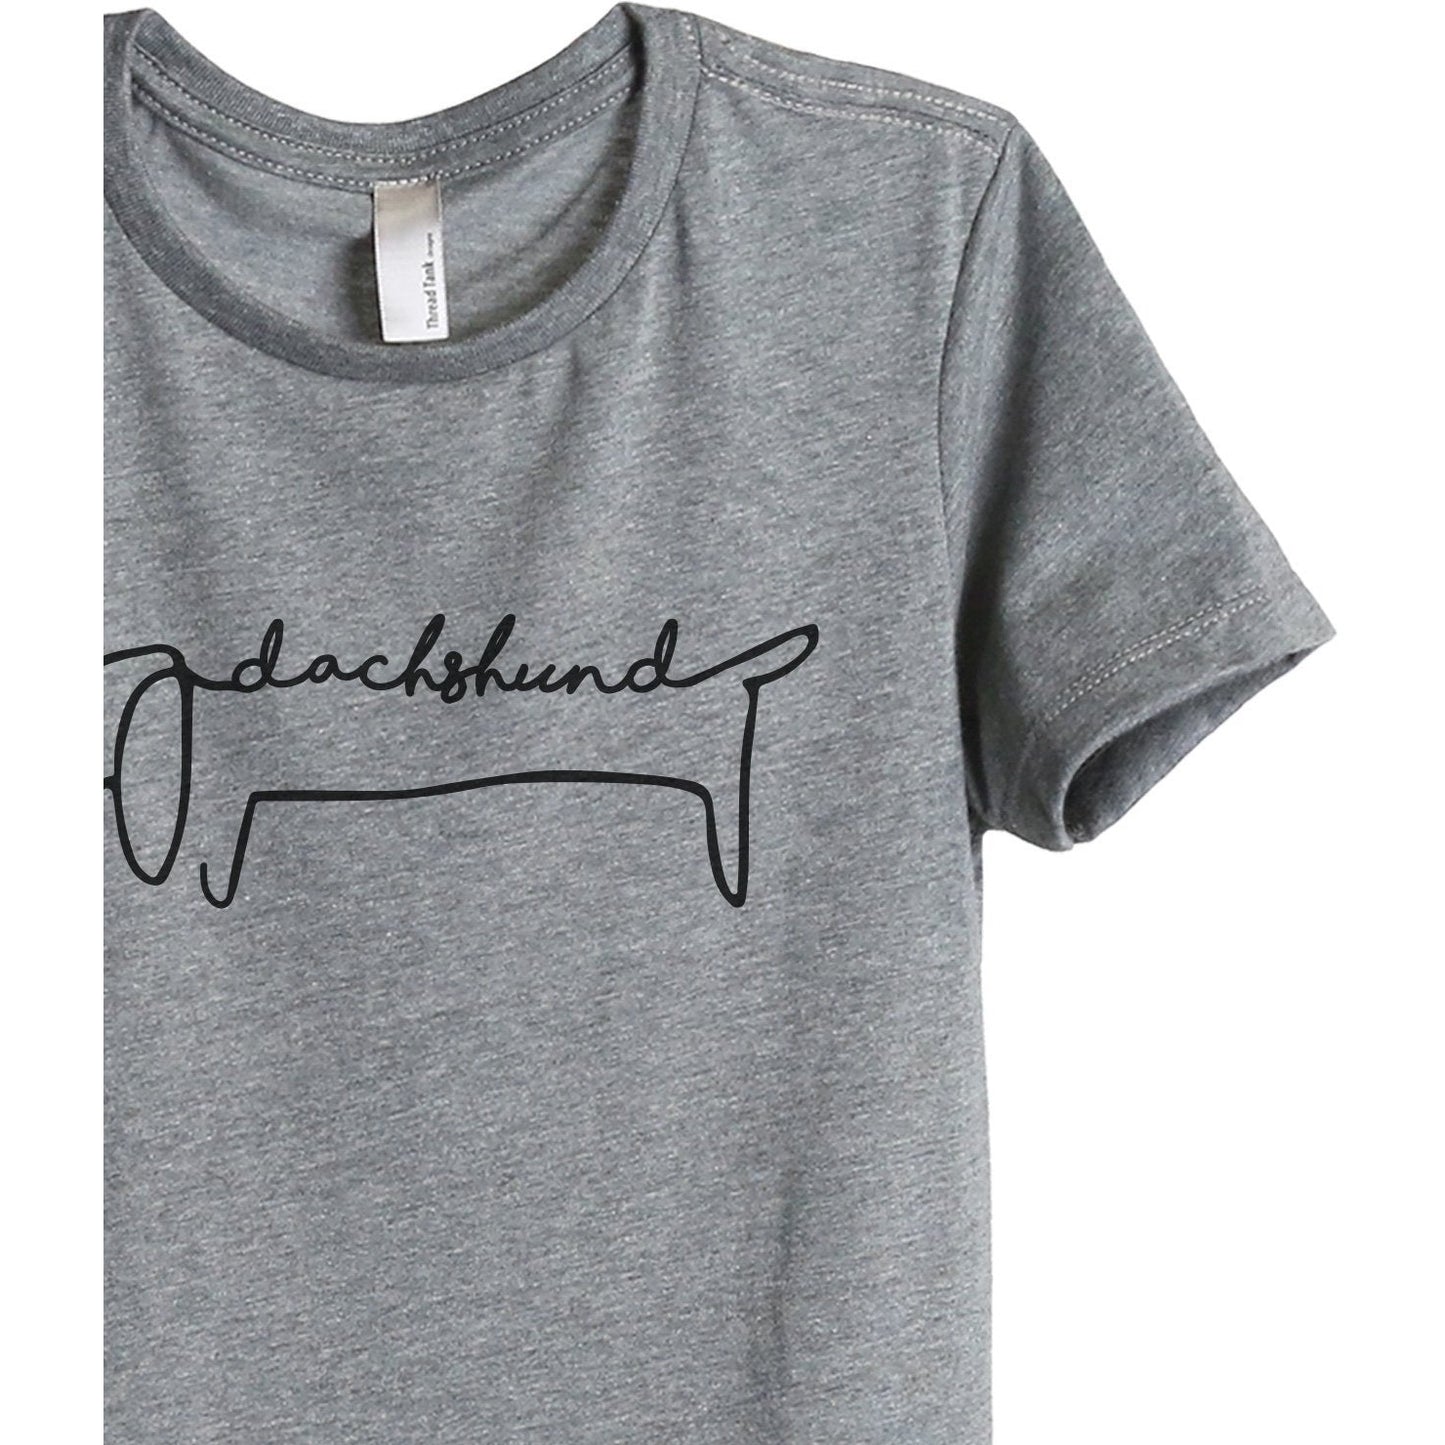 Dachshund Line Art Women's Relaxed Crewneck T-Shirt Top Tee Heather Grey Zoom Details
